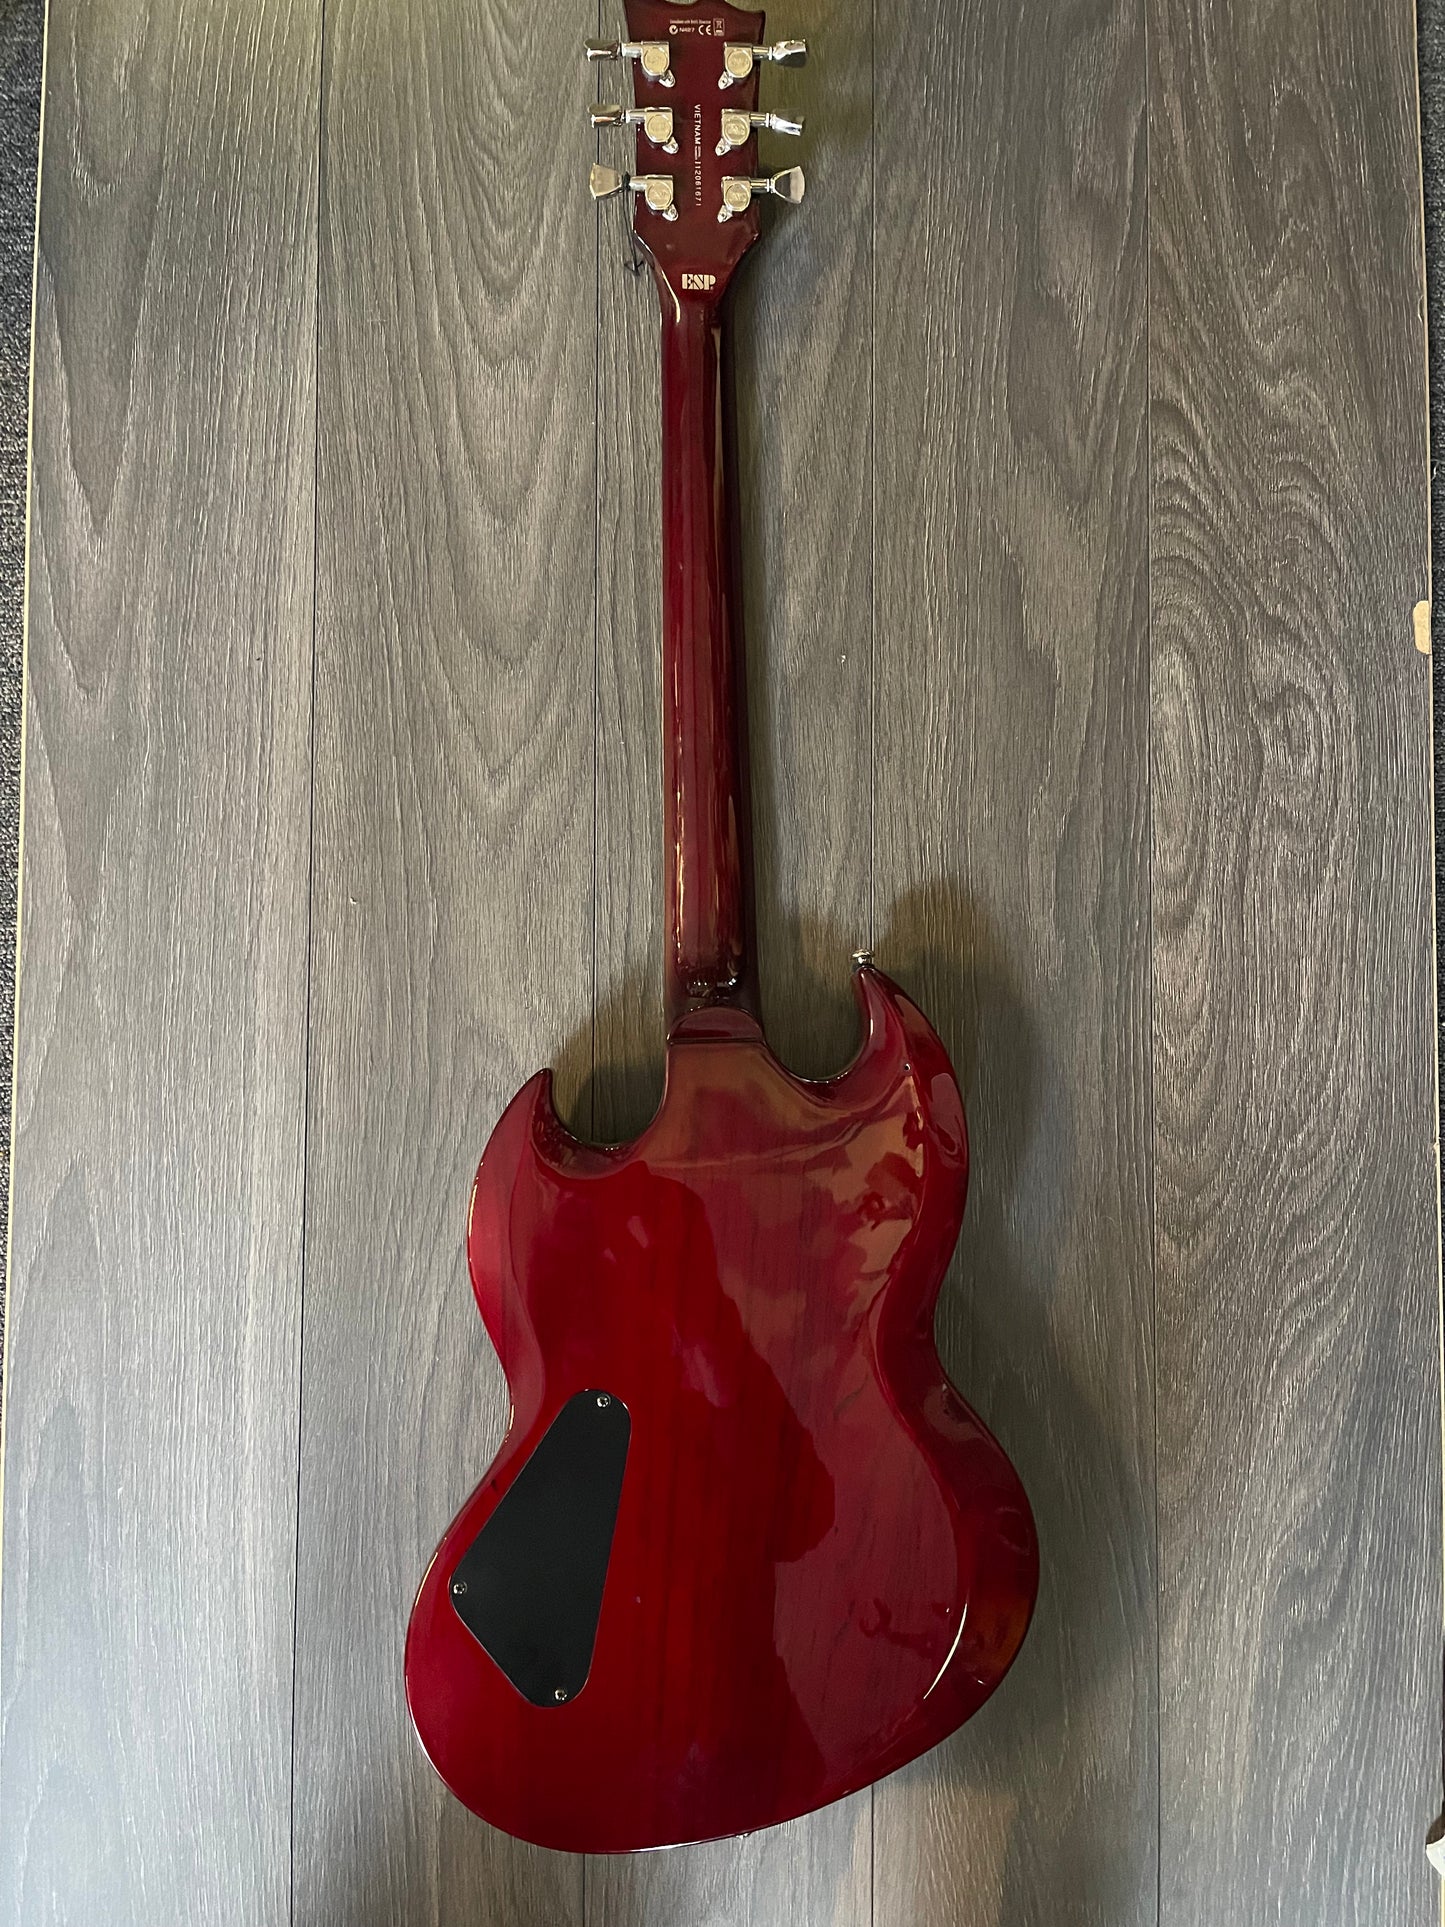 ESP LTD VIPER-256 electric guitar, See Thru Black Cherry